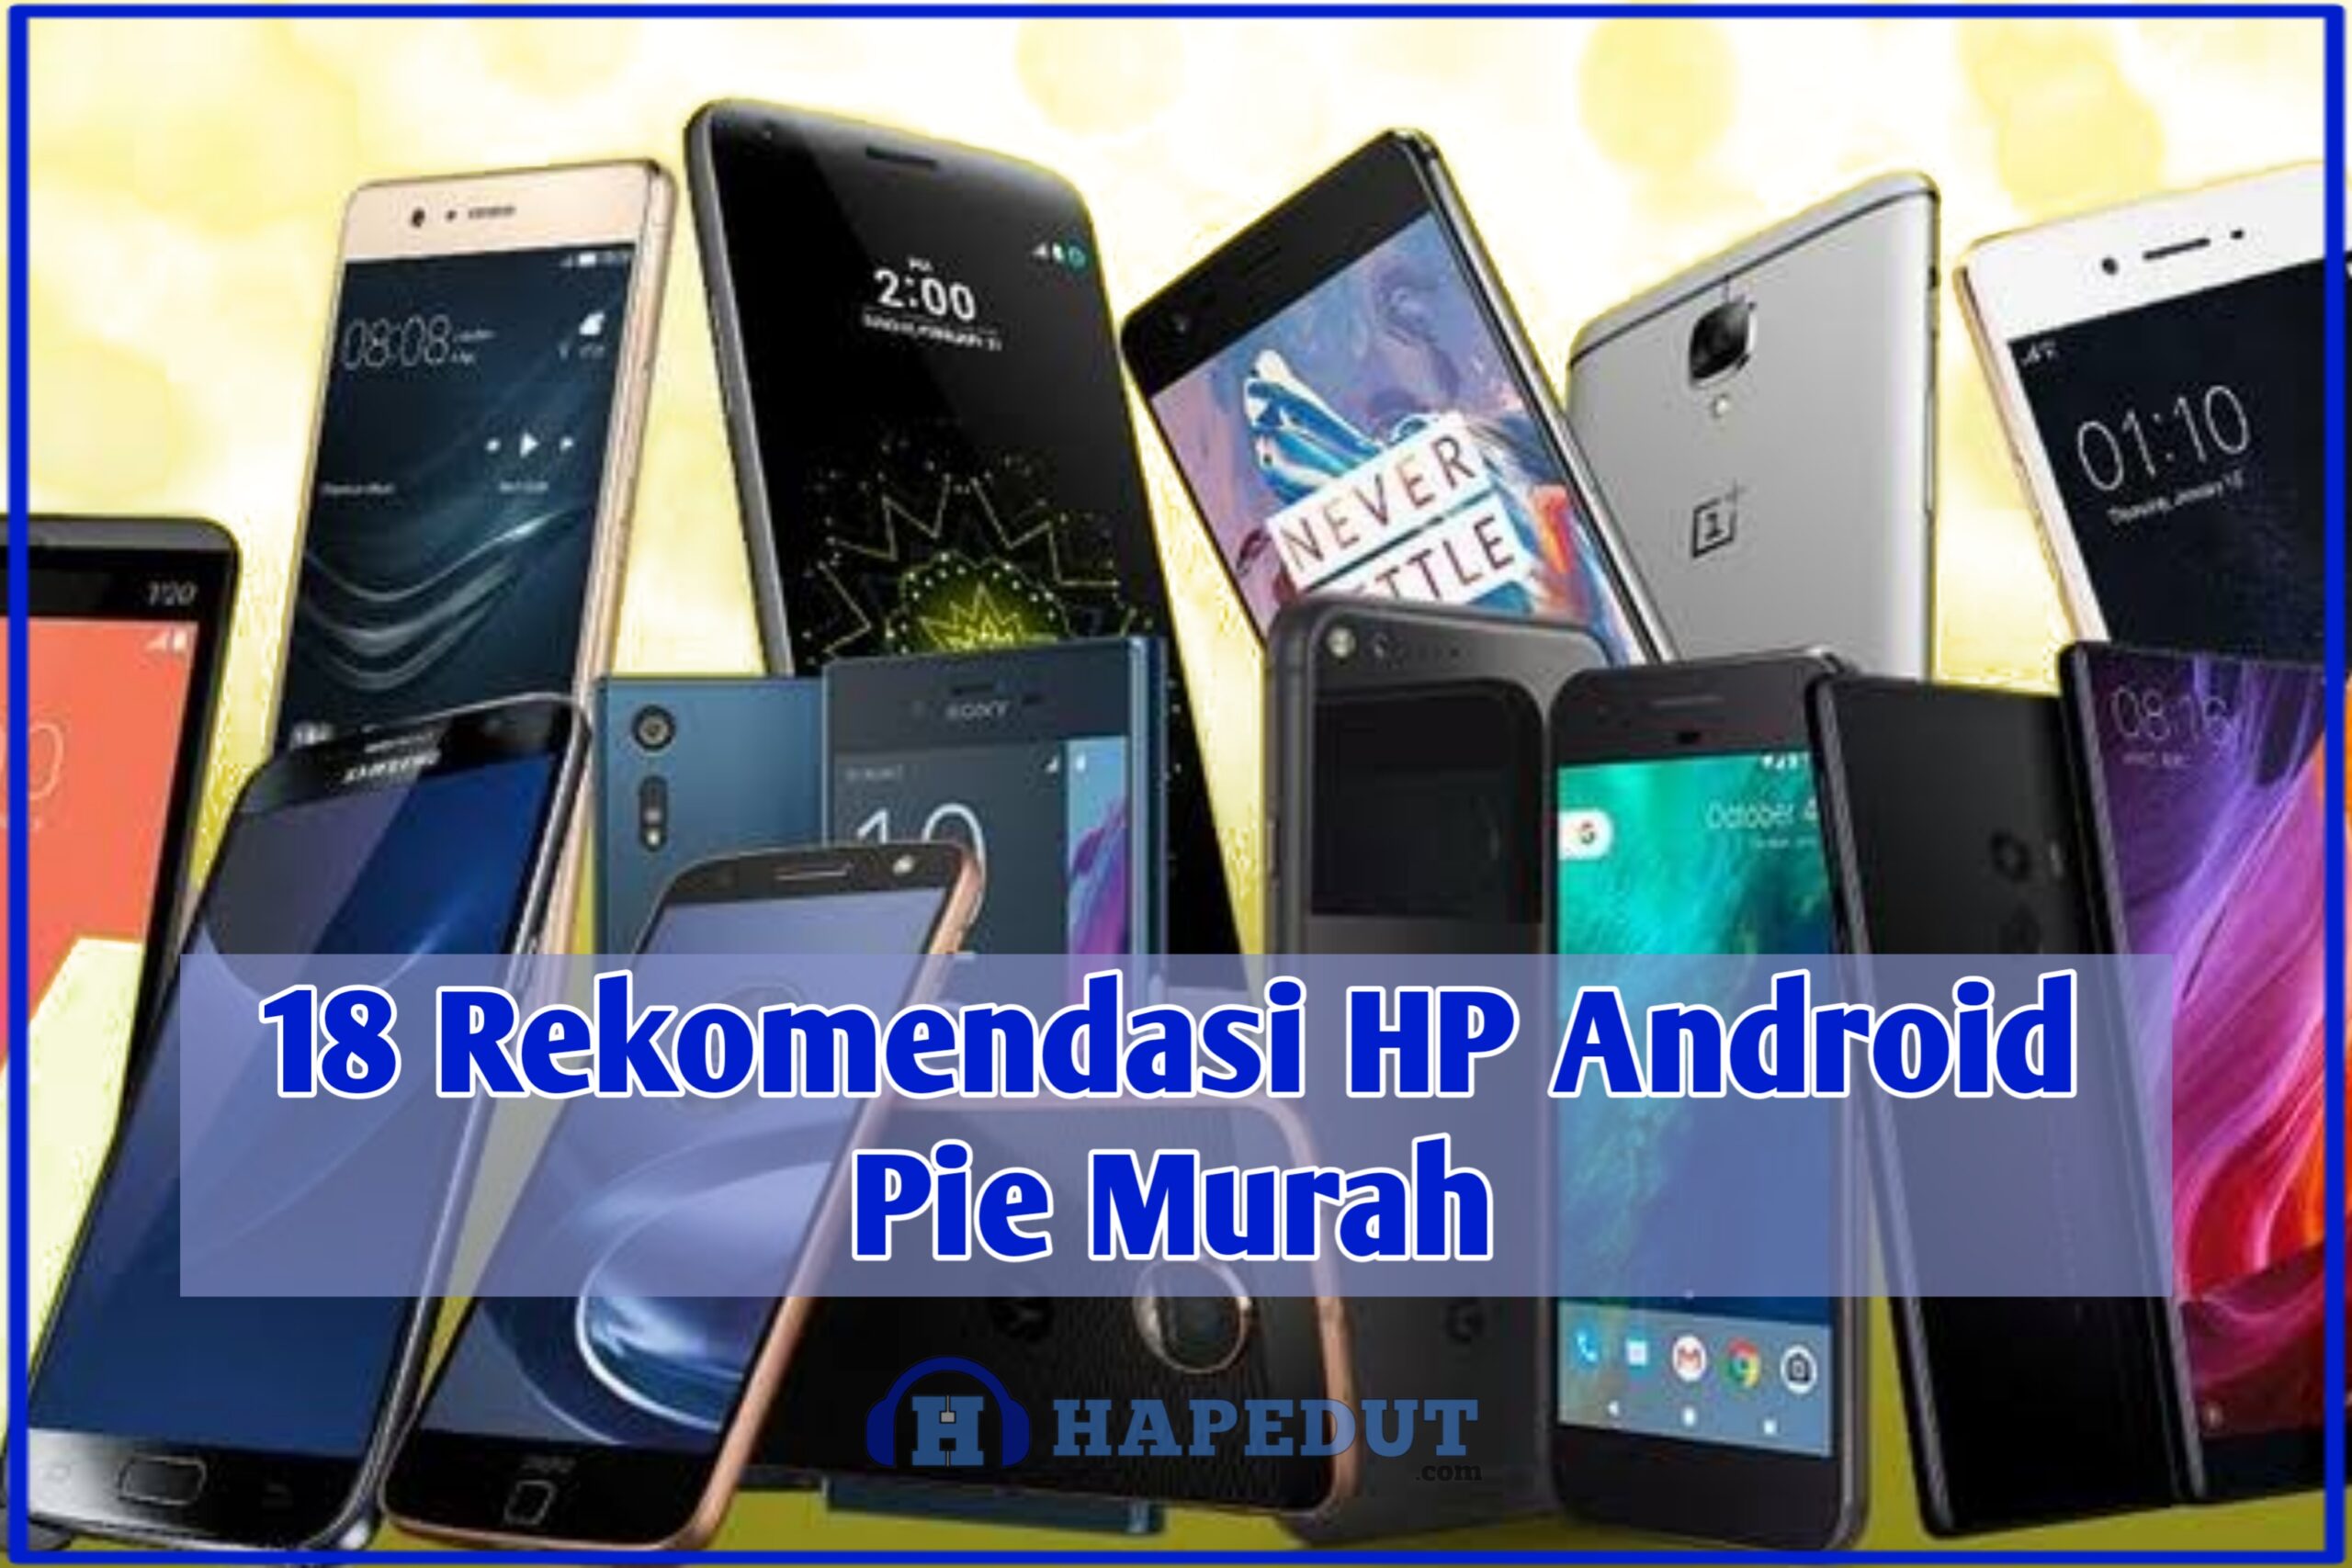 18 Rekomendasi HP Android Pie Murah : Hapedut